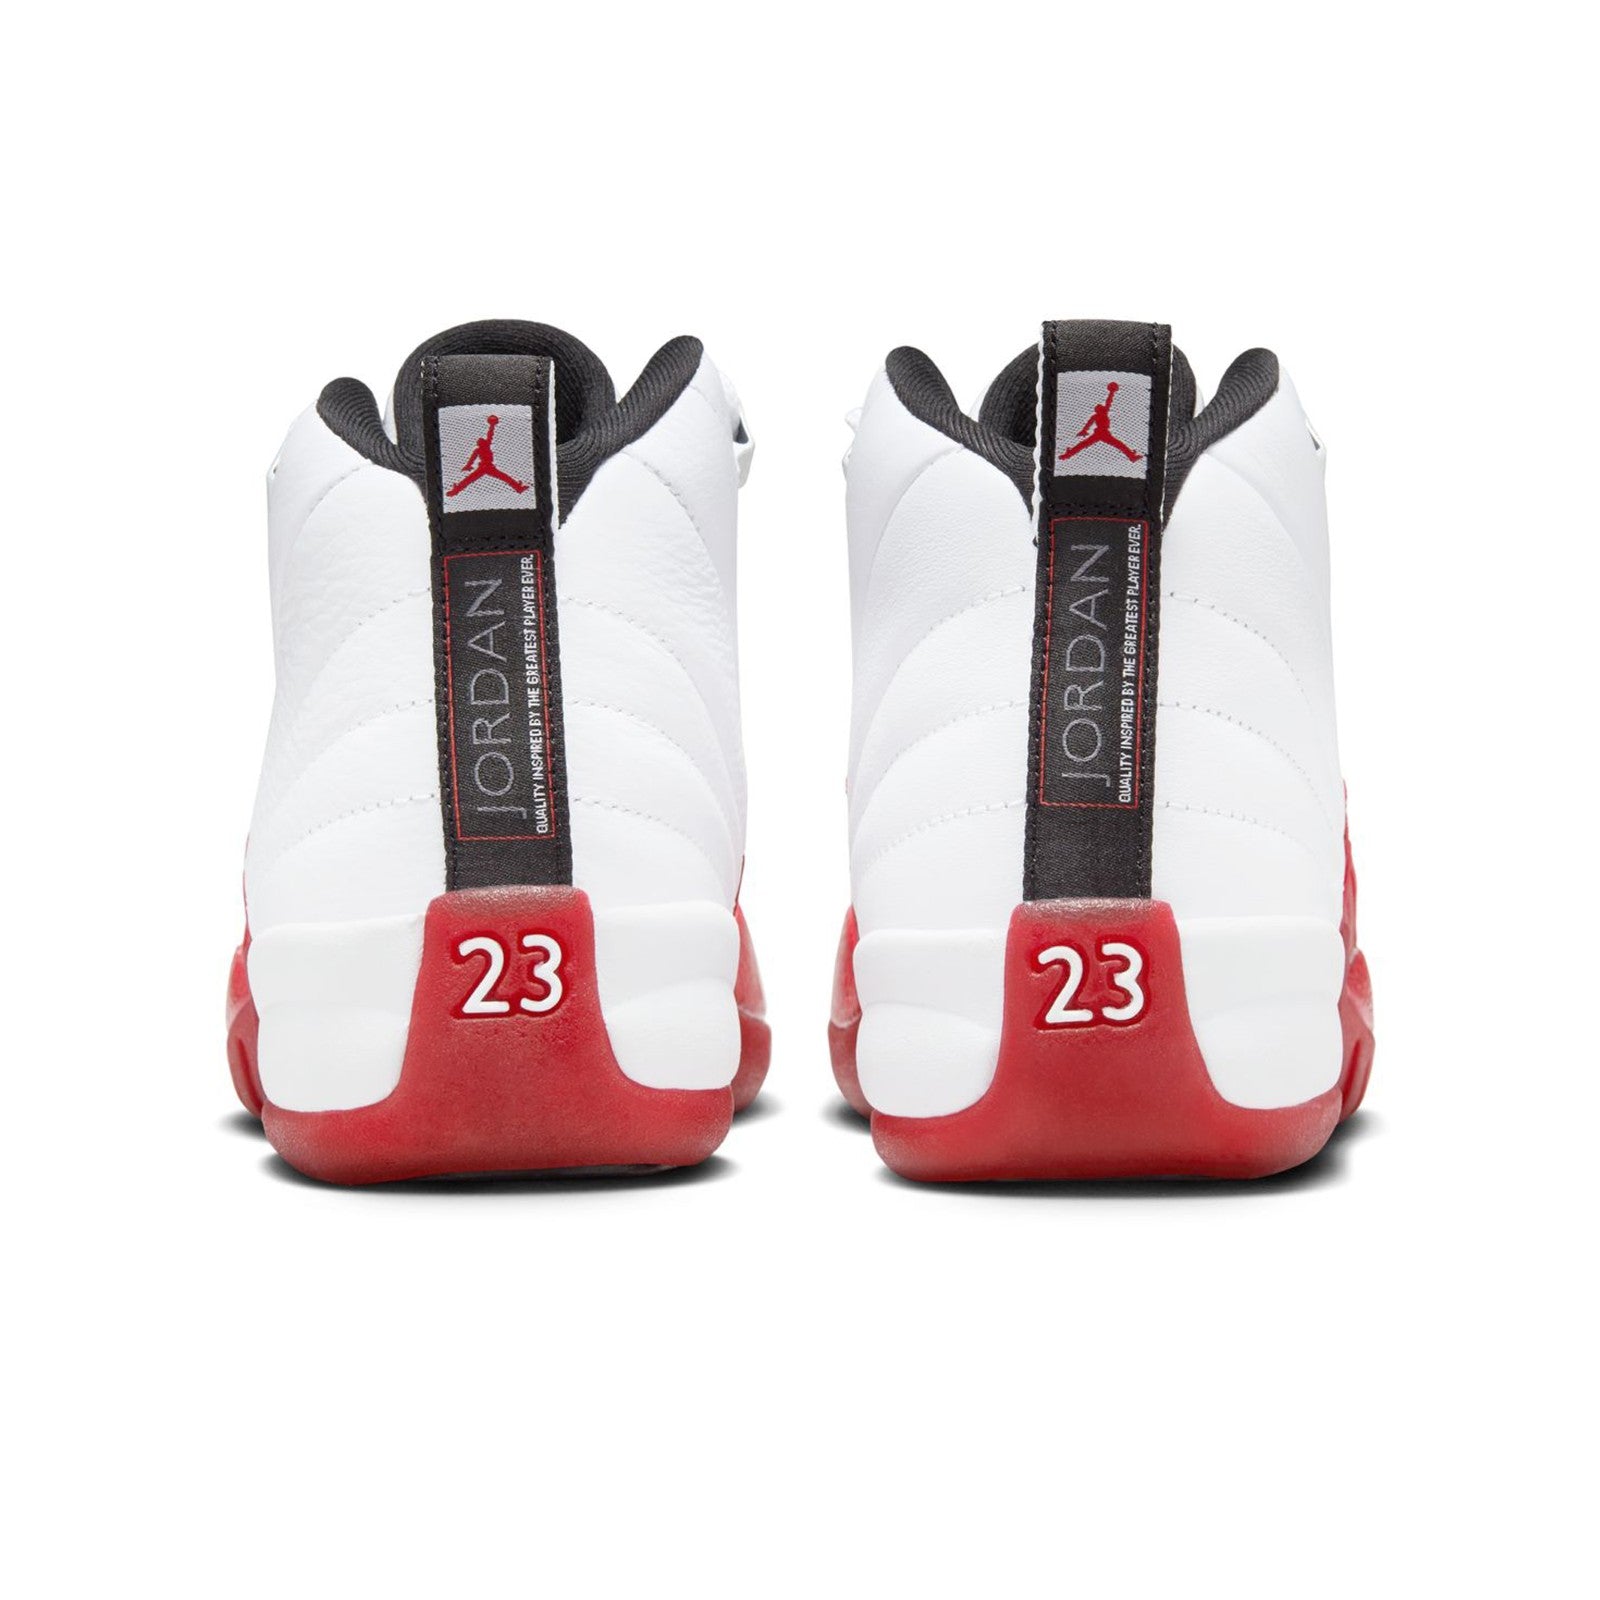 Nike Air Jordan 12 Retro "Cherry" Grade School Kids Shoes 153265-116 